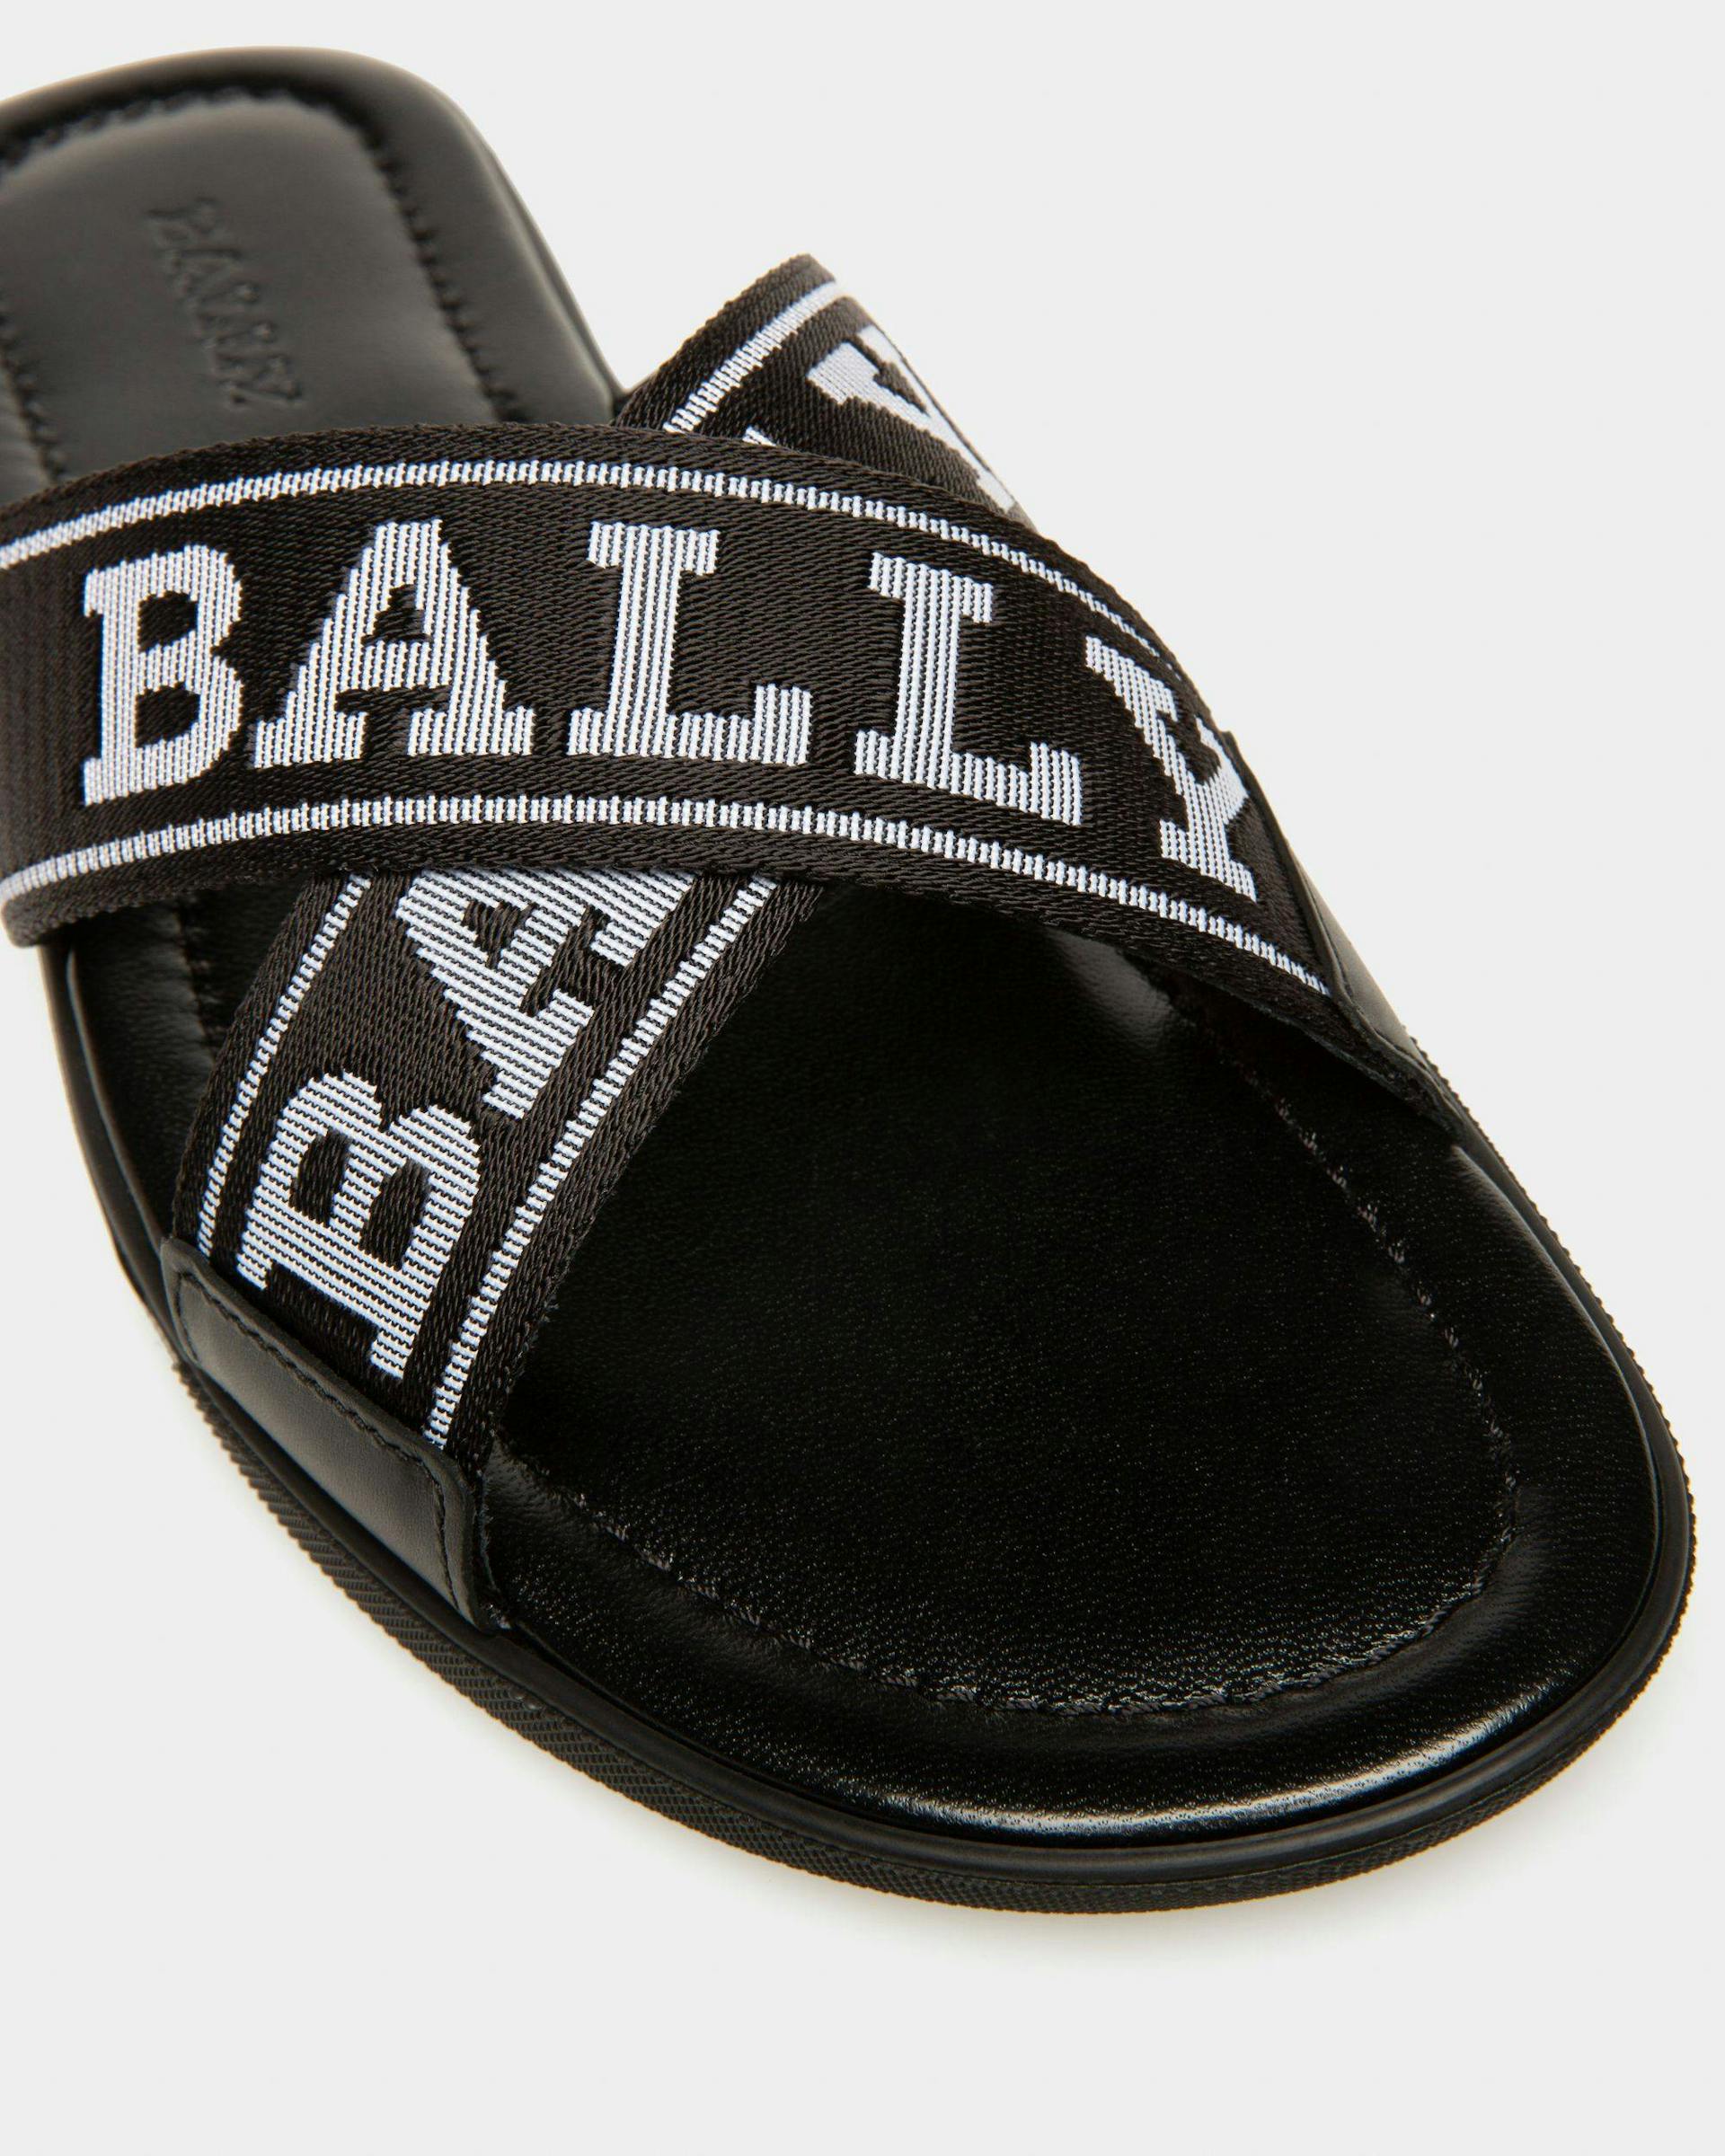 Bonks Fabric & Leather Sandals In Black - Men's - Bally - 05